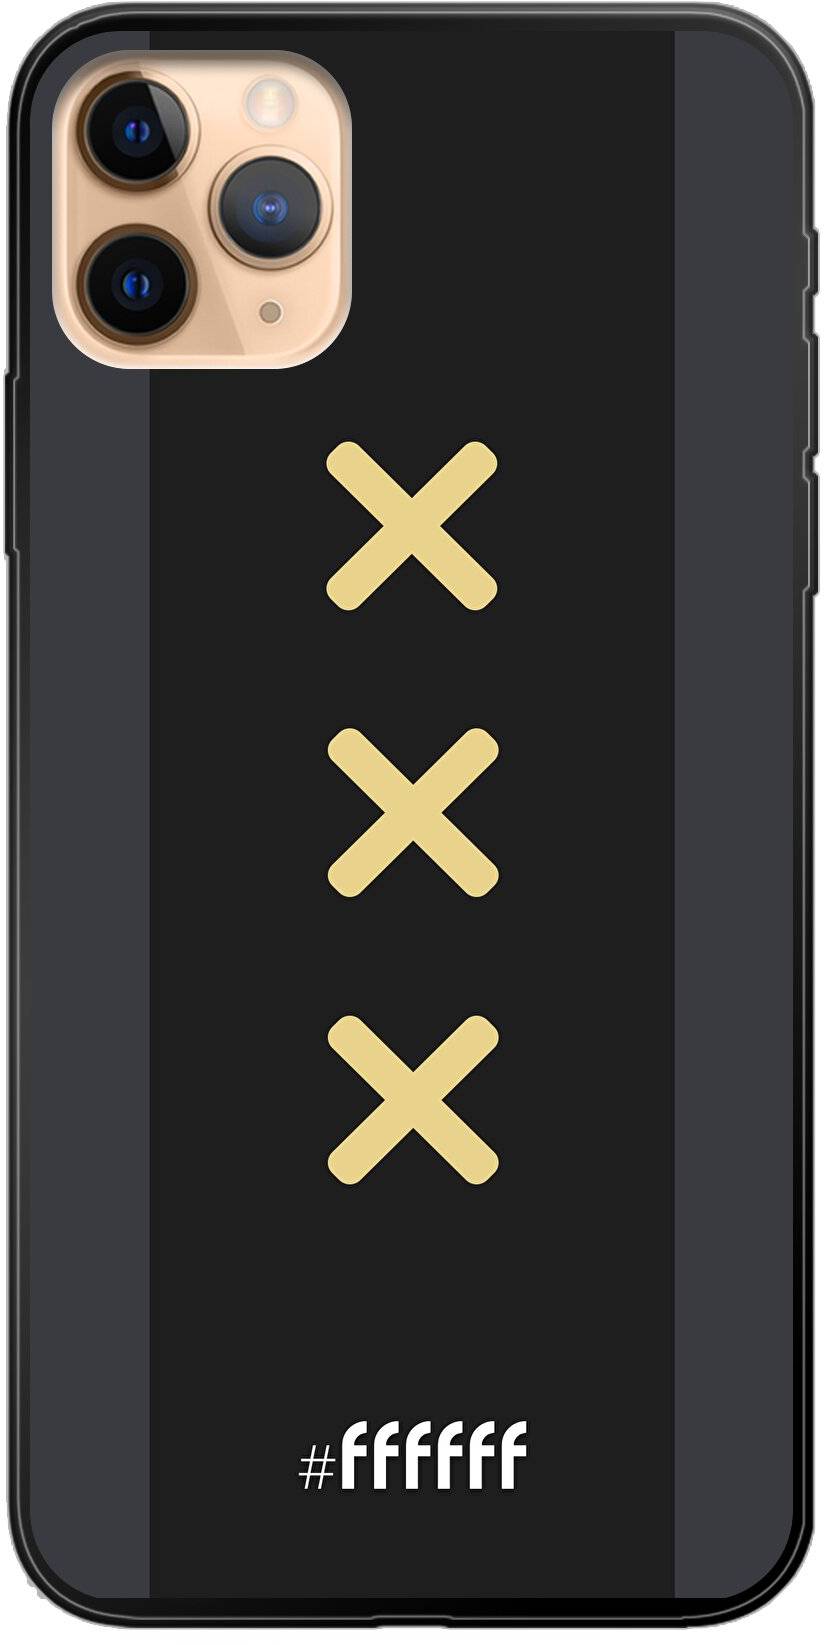 Ajax Europees Uitshirt 2020-2021 iPhone 11 Pro Max